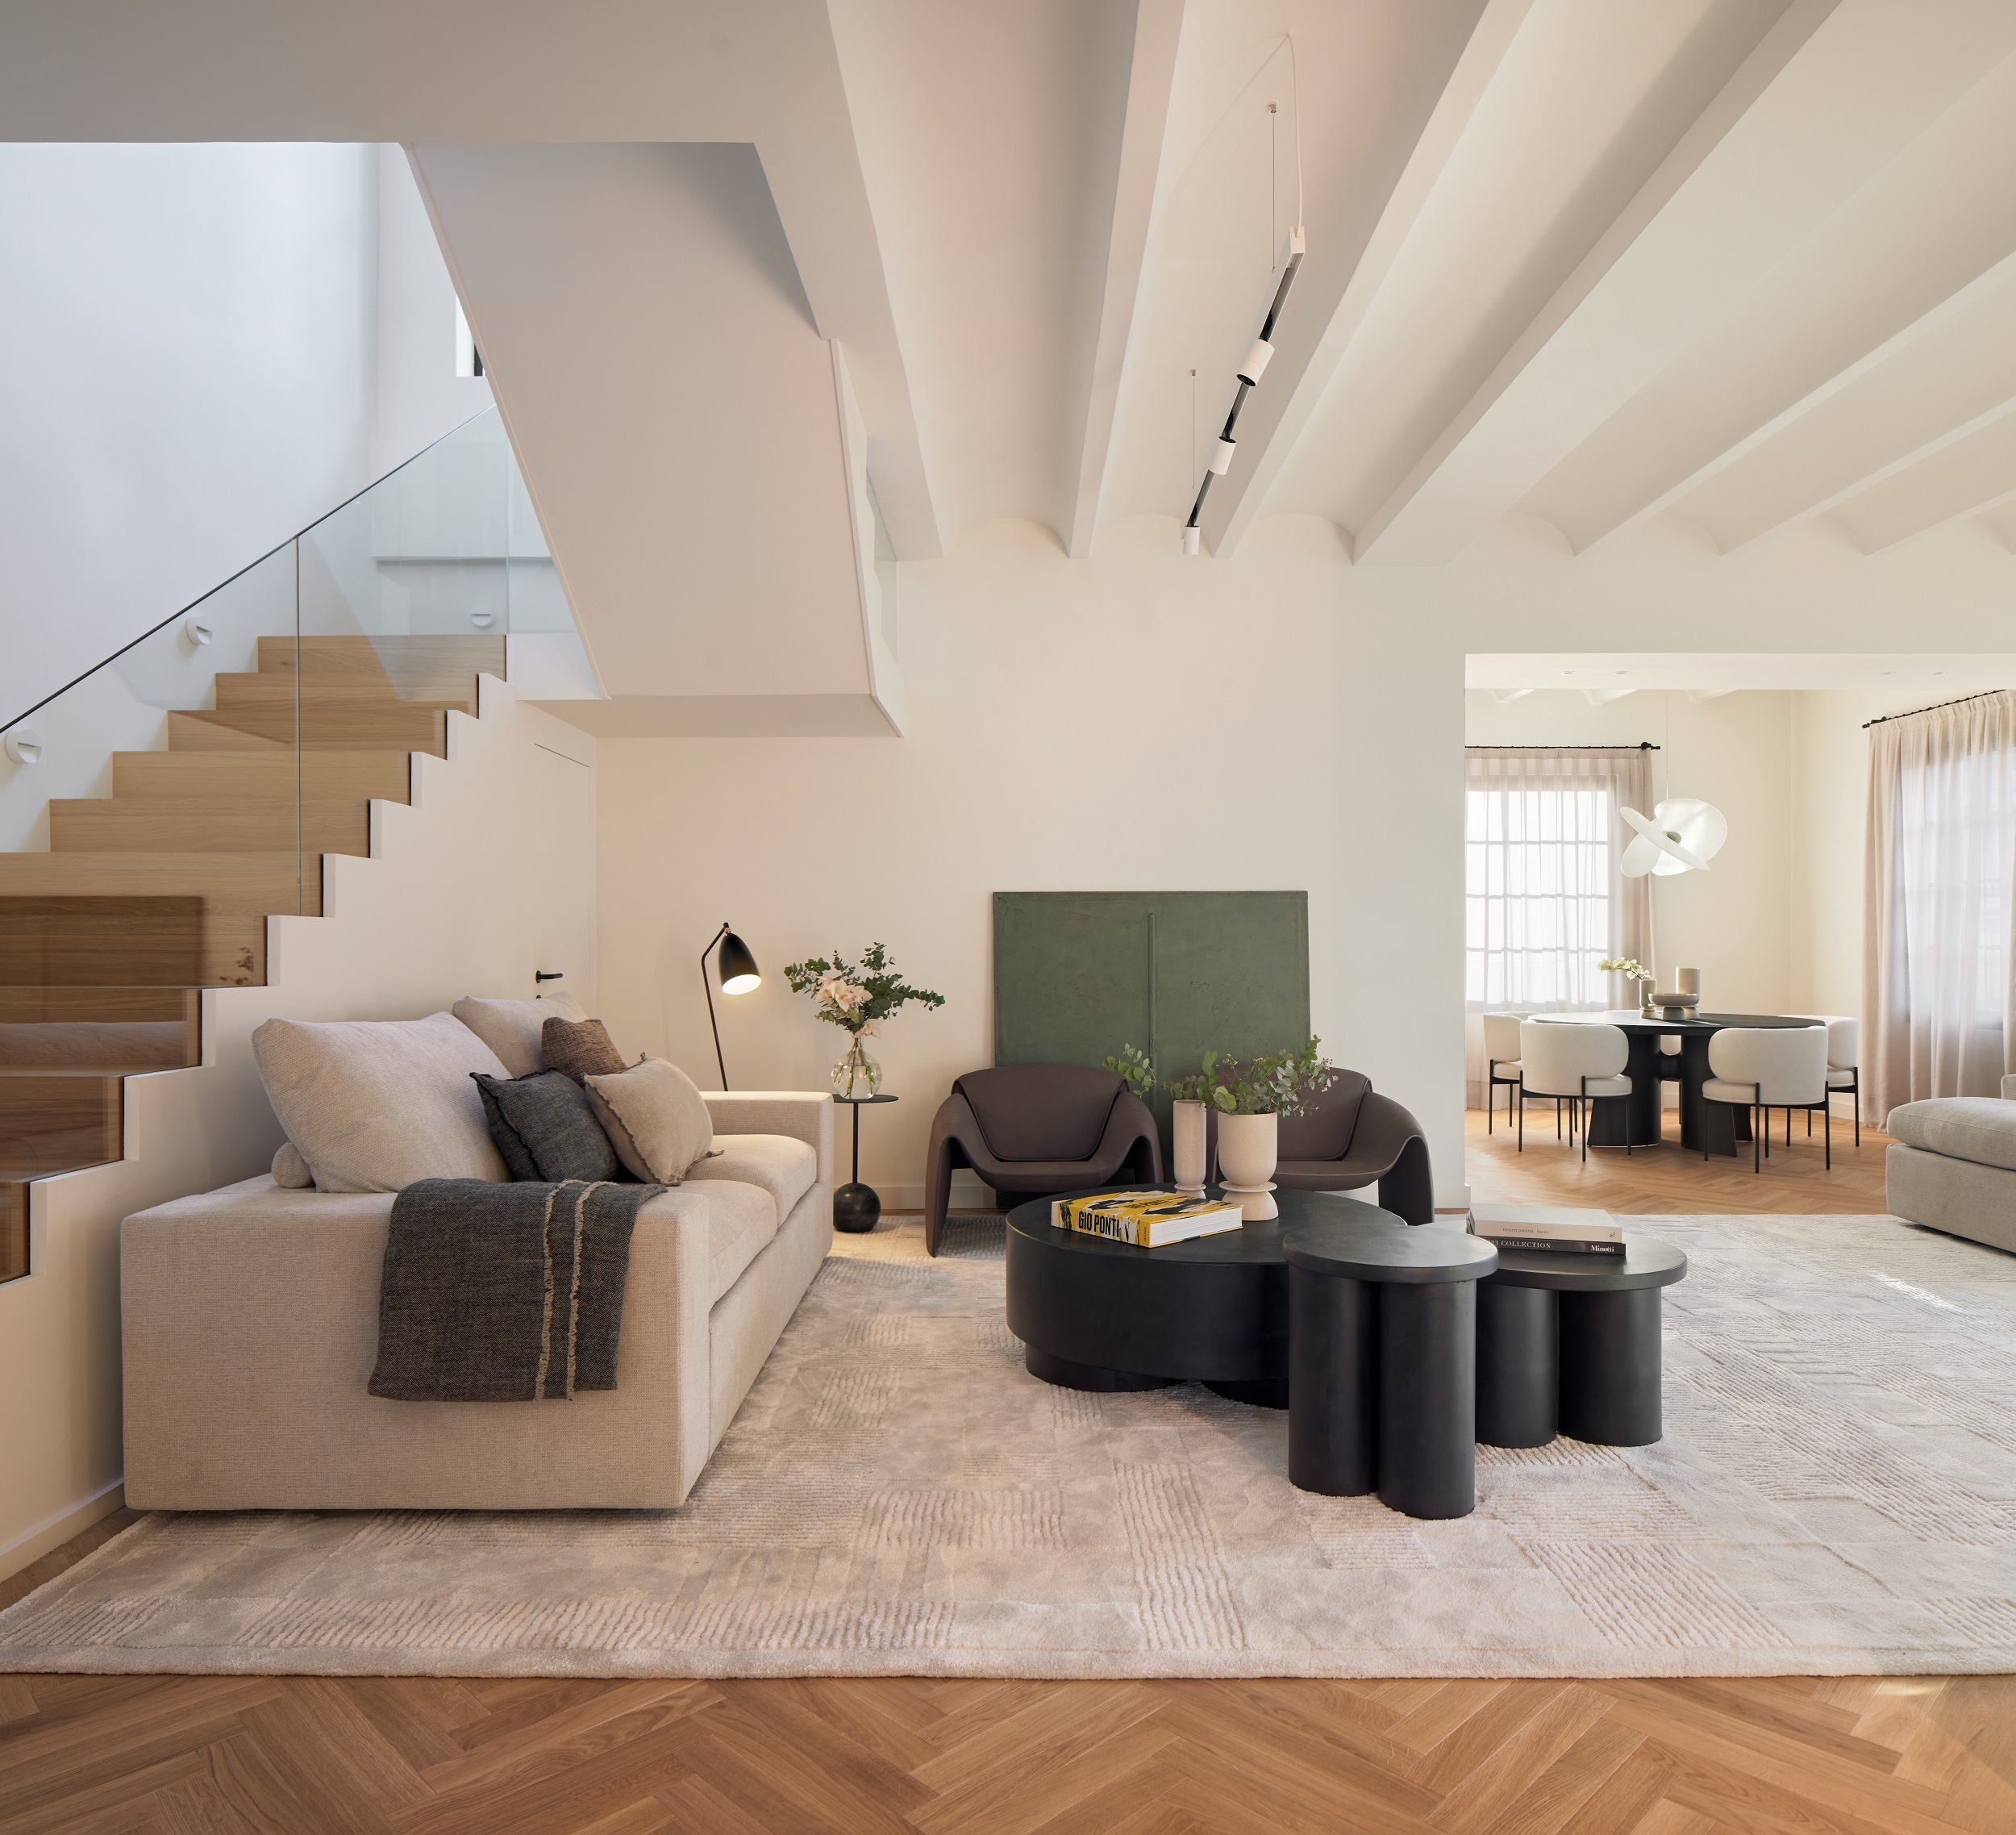 Pedralbes AV. Penthouse LUV Studio Living Room 4 - LUV Studio - Arquitectura y diseño - Barcelona